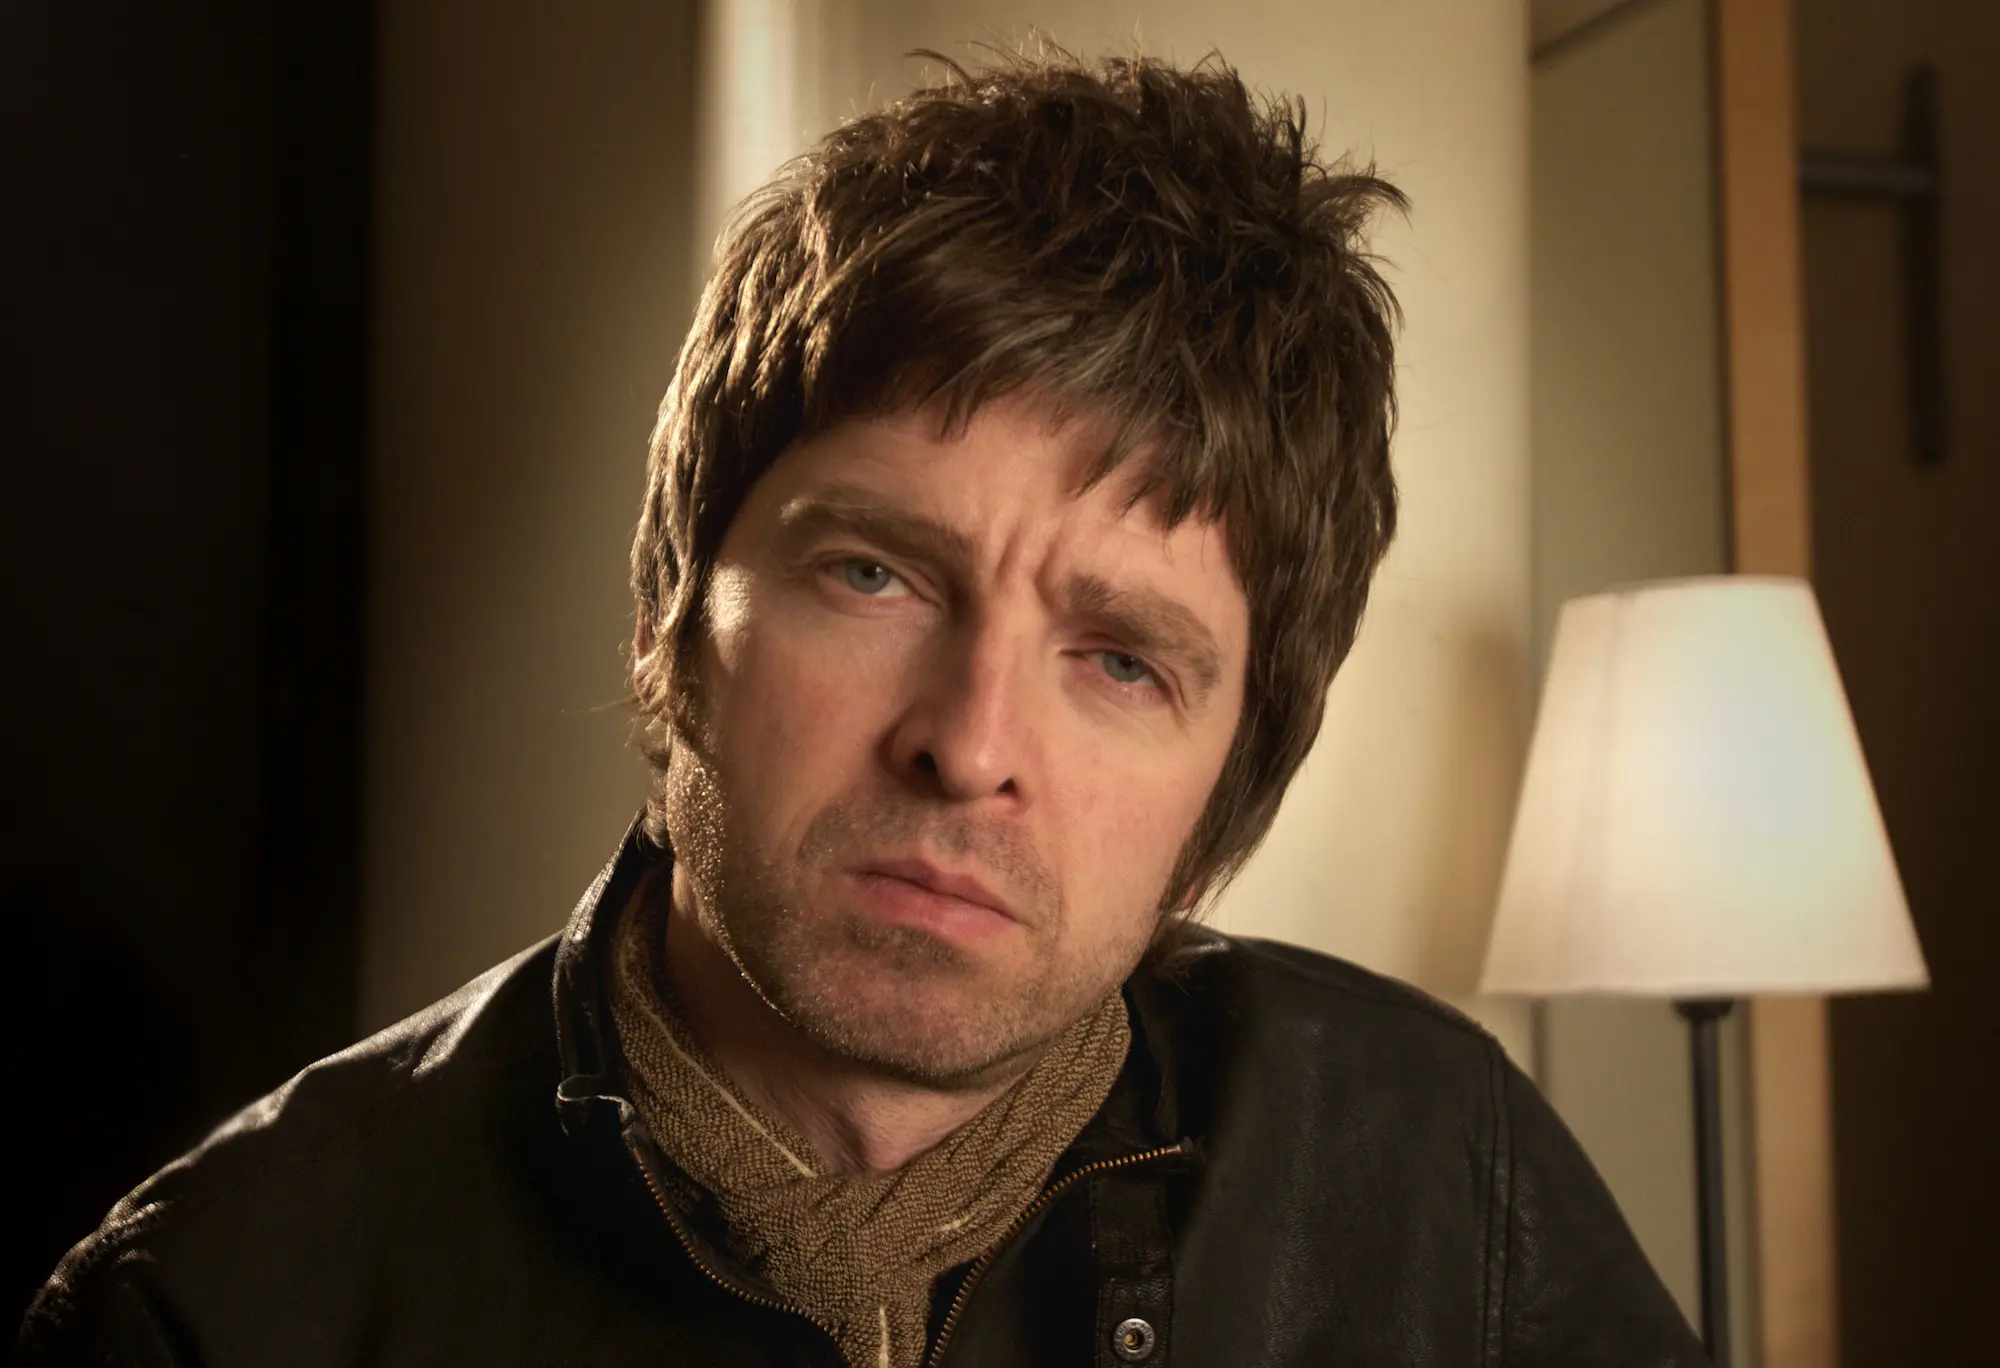 Noel Gallagher. (riffyou)